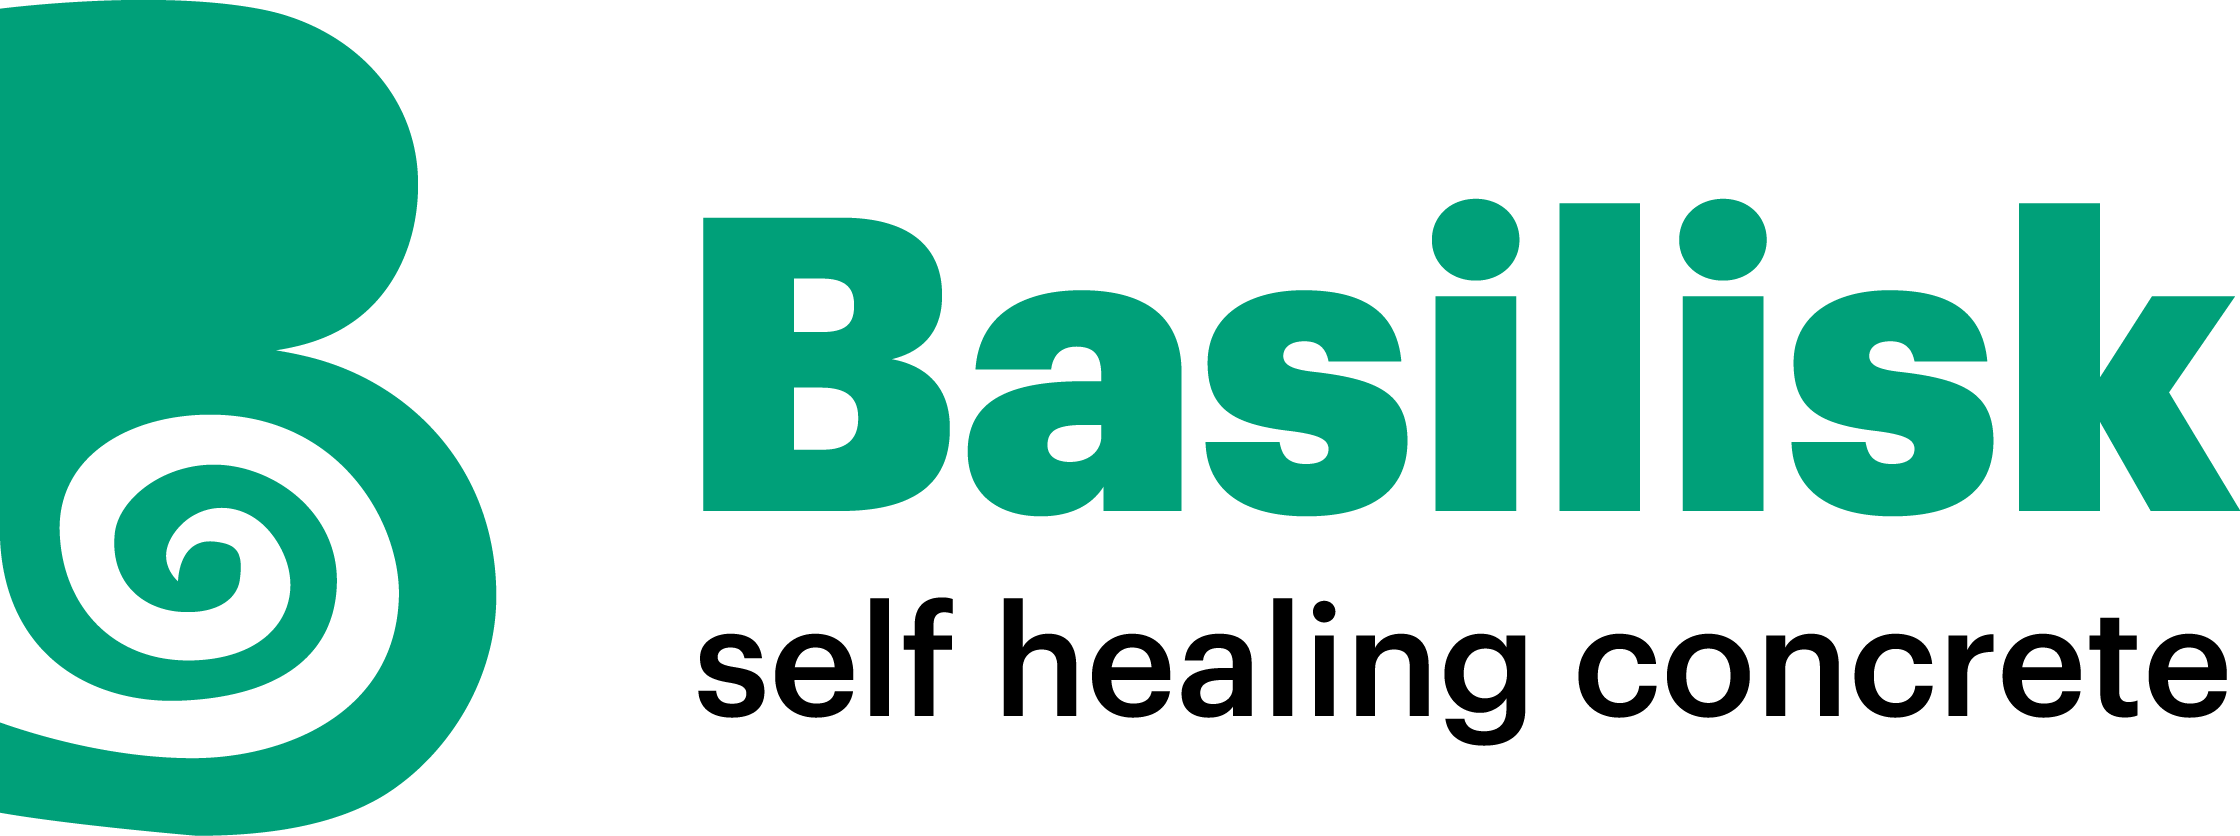 Basilisk Self-Healing Concrete